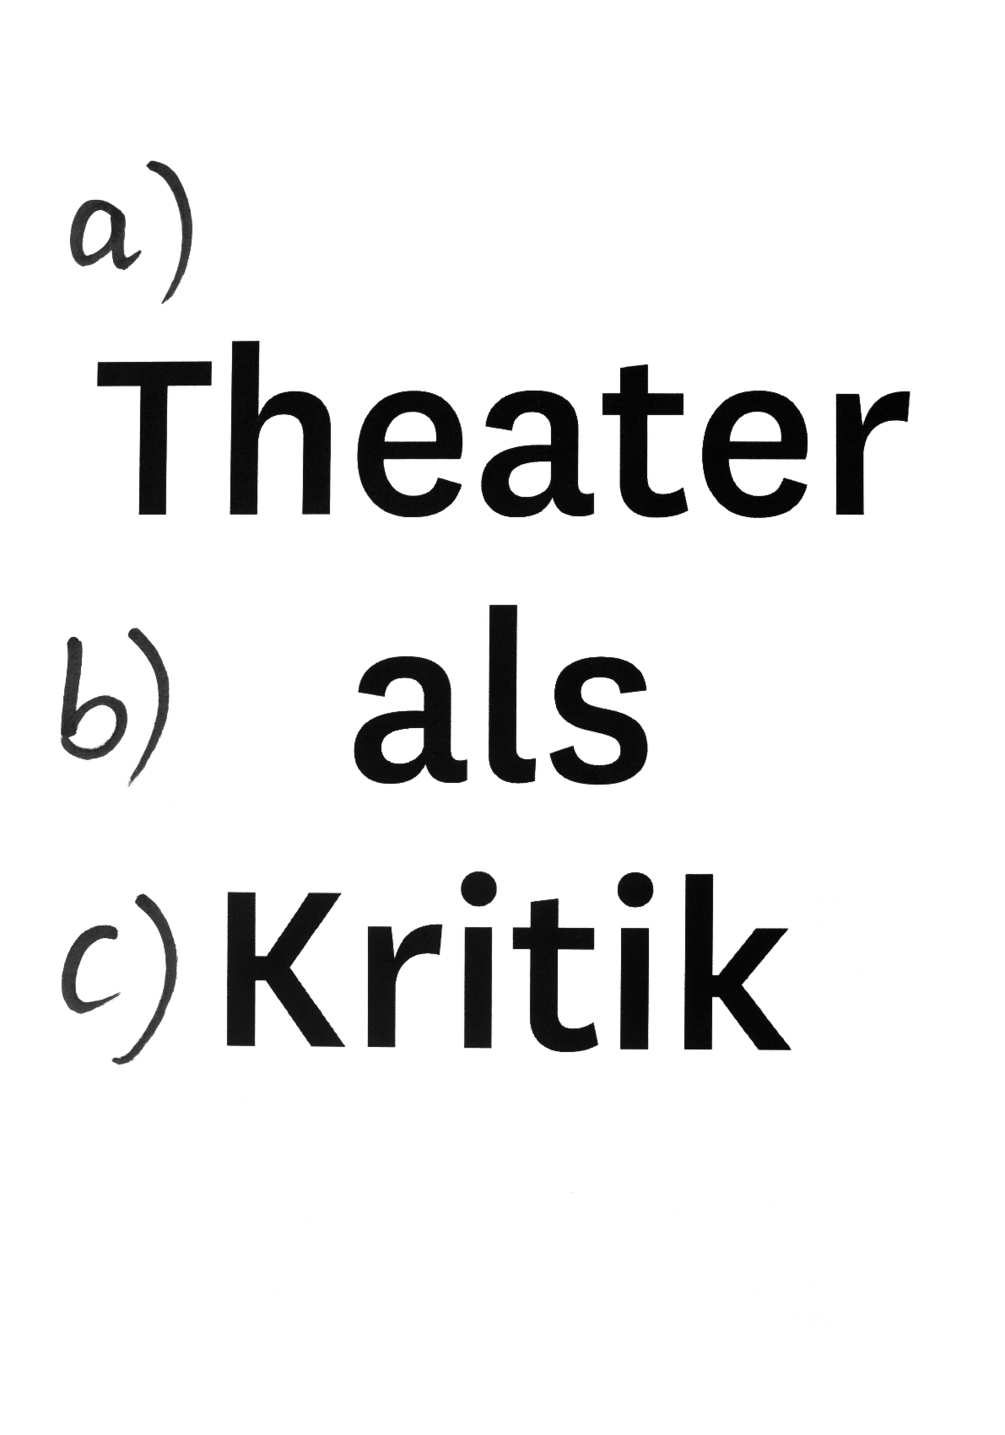 theater-as-critique-slip-15-1005x1435px